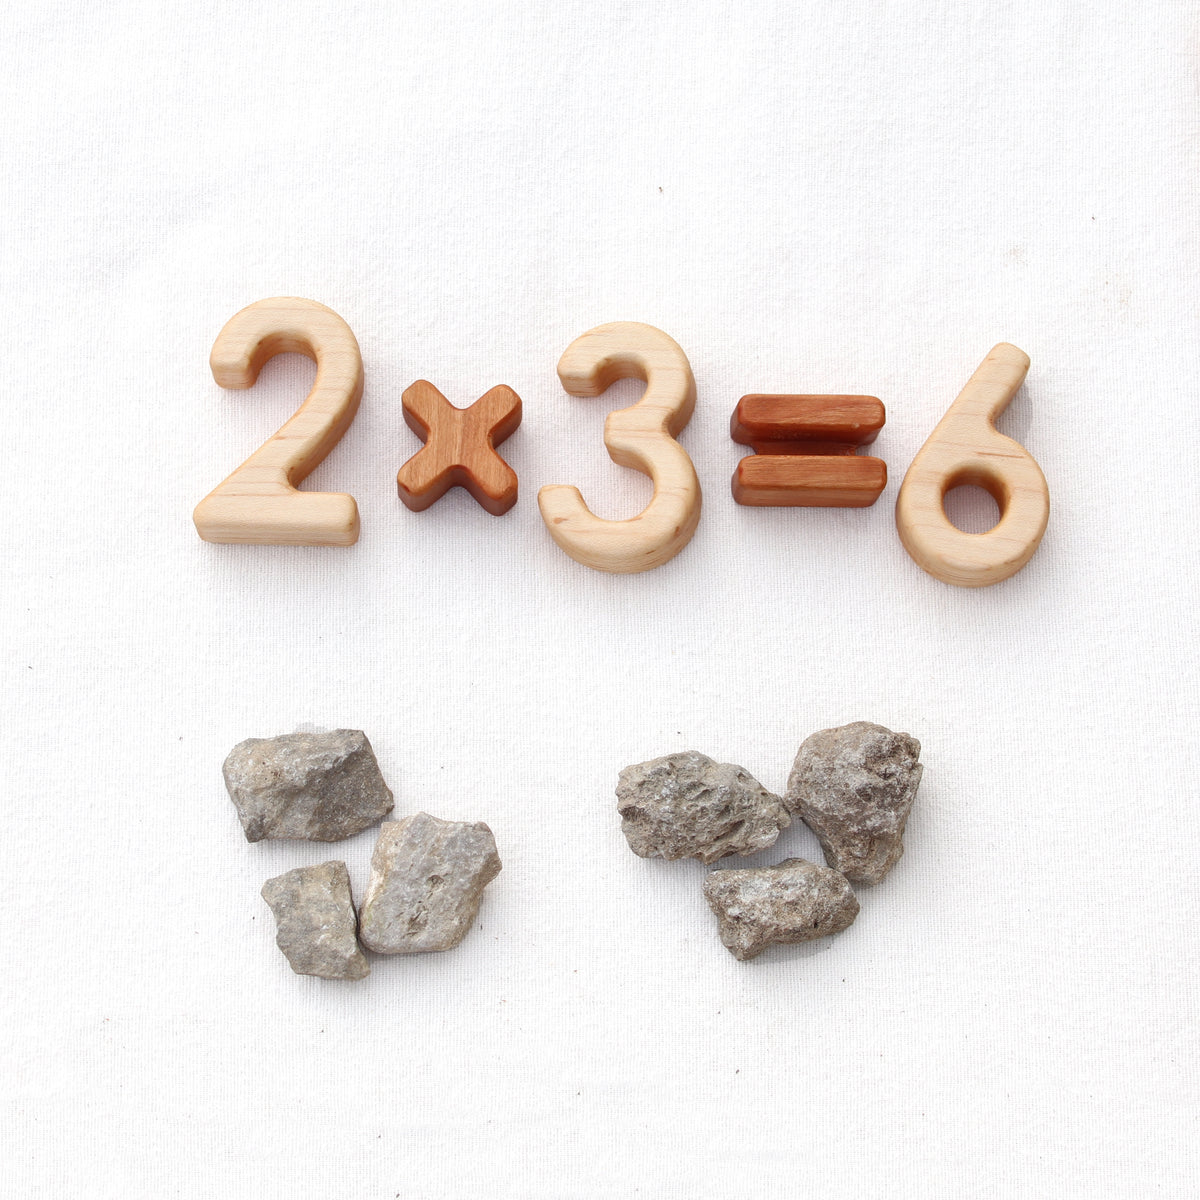 Wood Number and Math Symbol Blocks